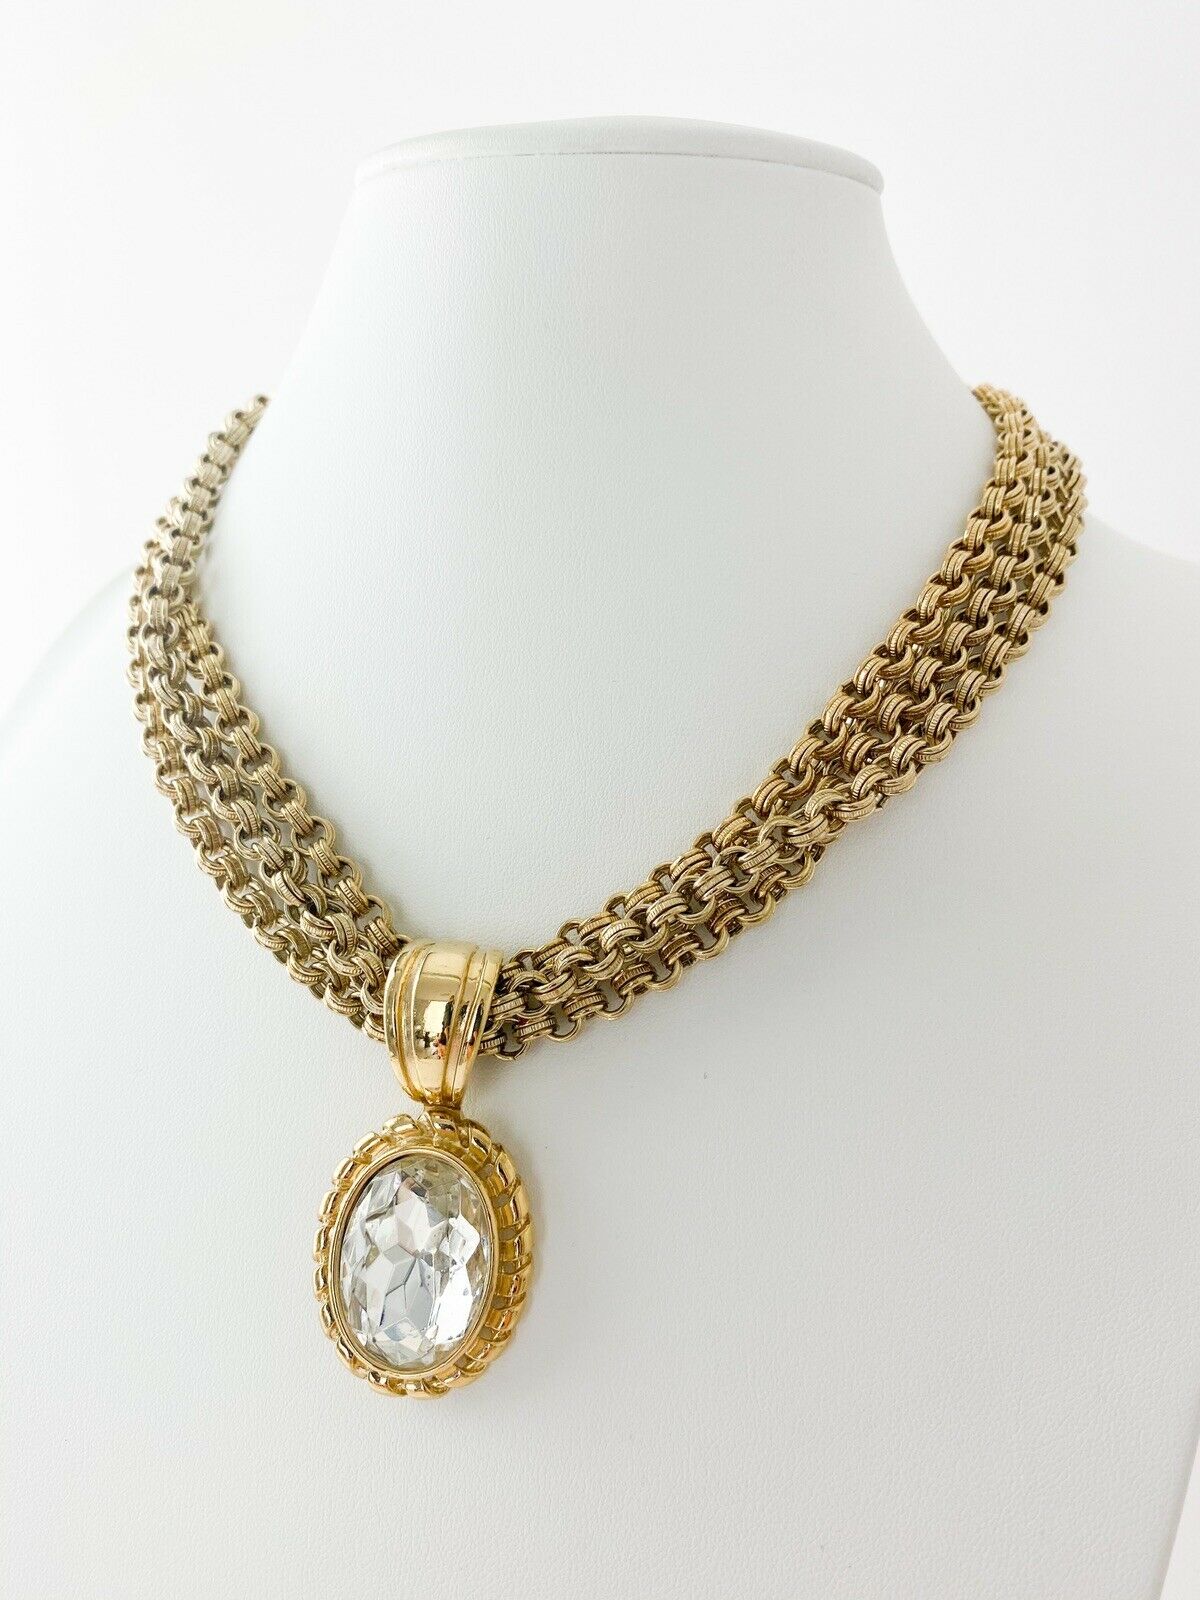 Givenchy Gold Tone Massive Rhinestone Multi-Strands Chain Necklace Vintage